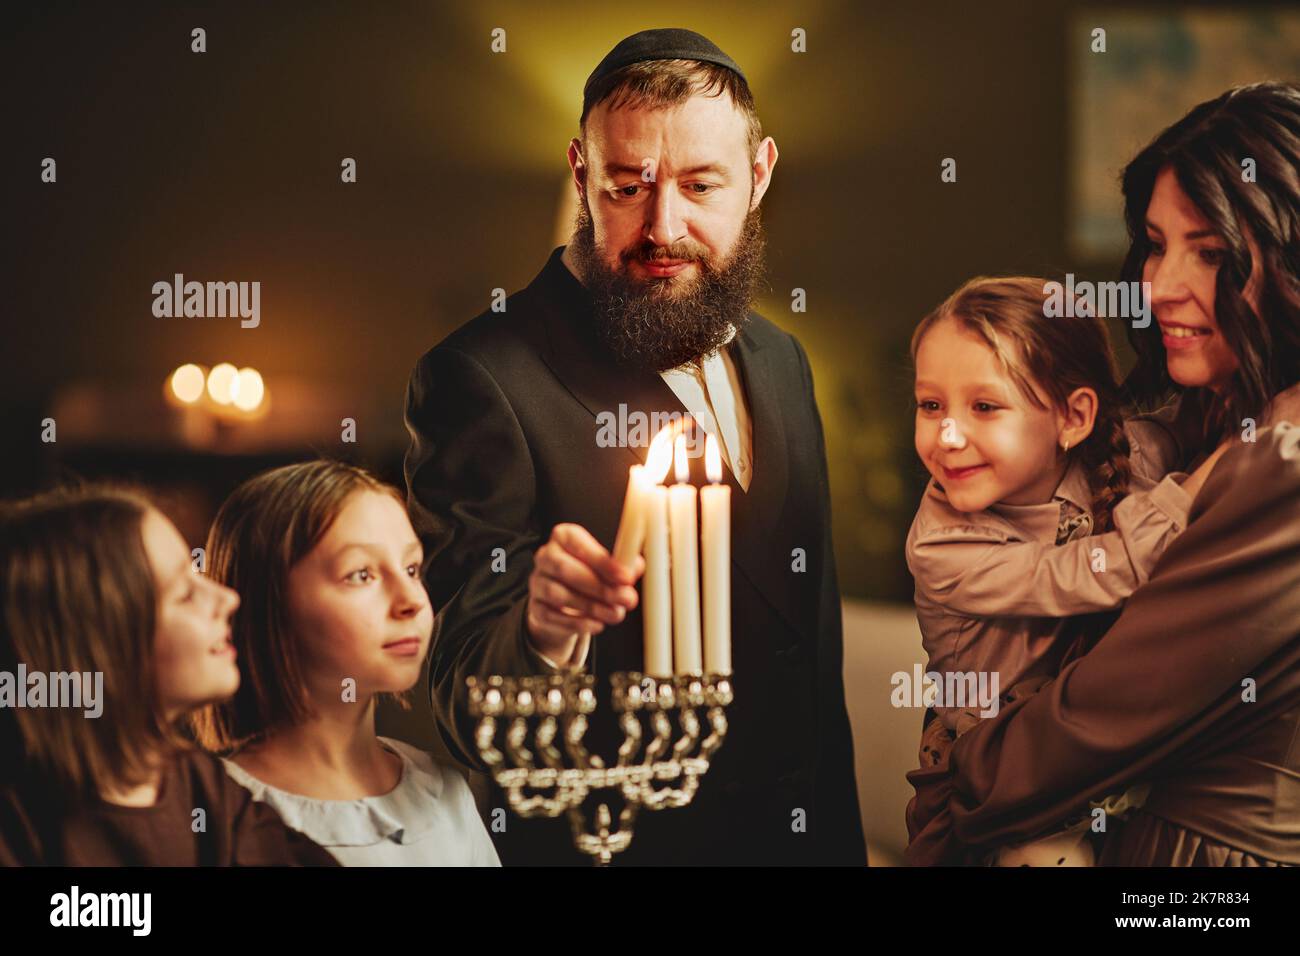 Portrait of orthodox jewish man lighting menorah candle with family during Hanukkah celebration Stock Photo